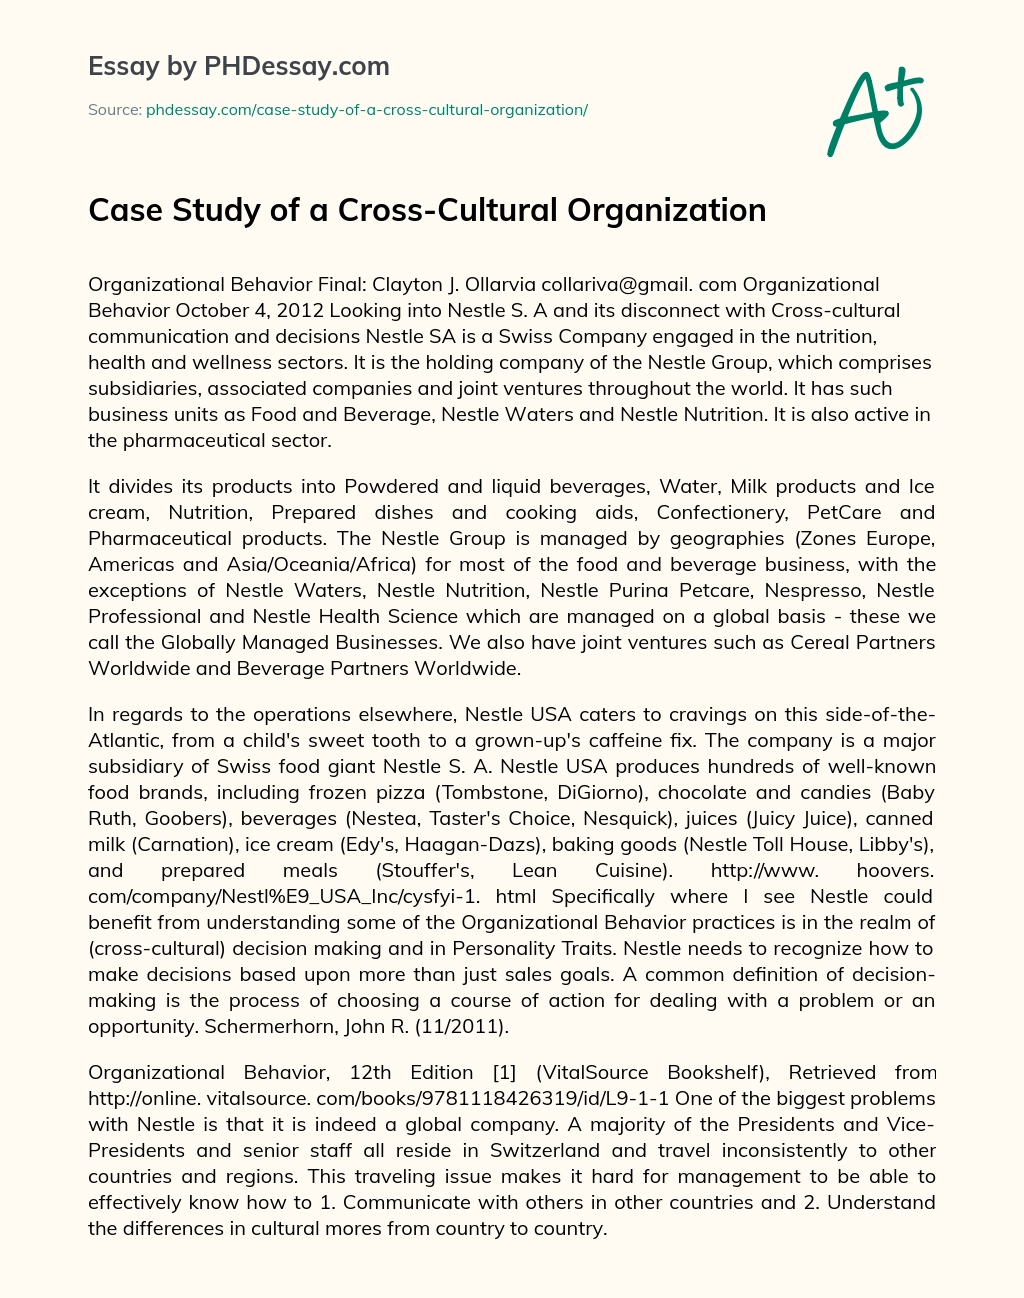 Case Study of a Cross-Cultural Organization essay